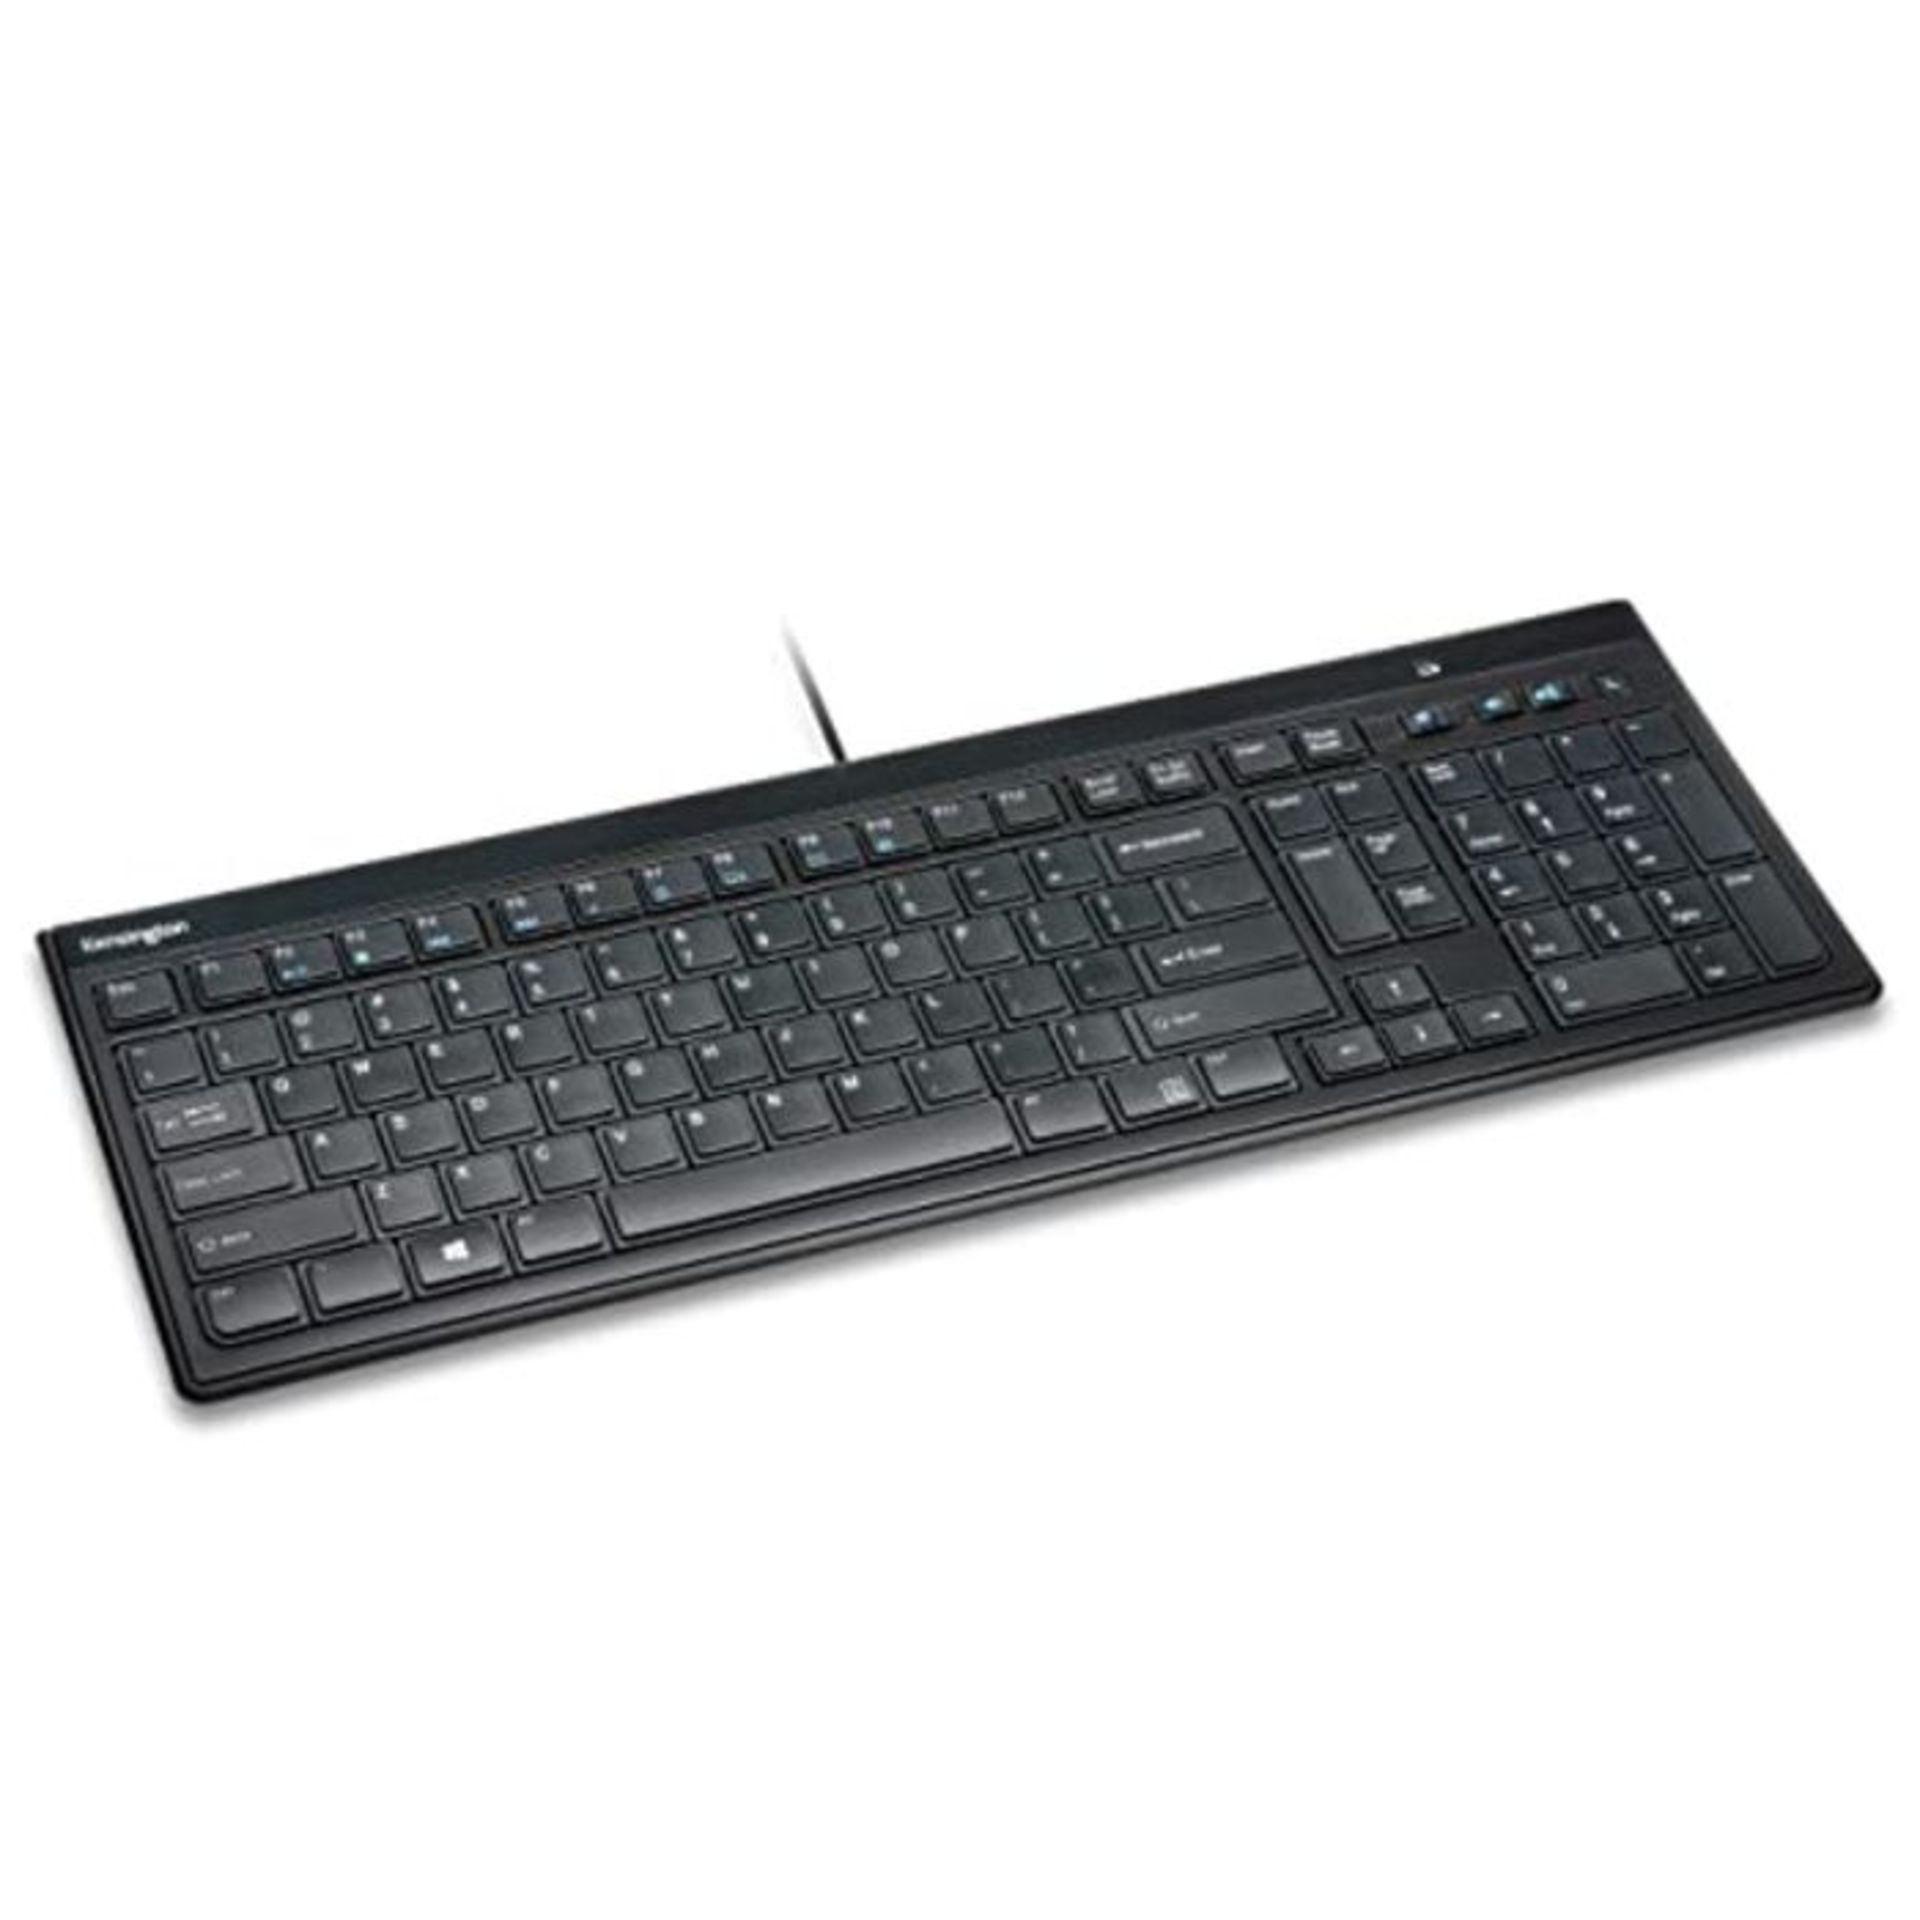 [CRACKED] Kensington Wired Keyboard - AdvanceFit Slim Full Size USB Keyboard, Ideal Ho